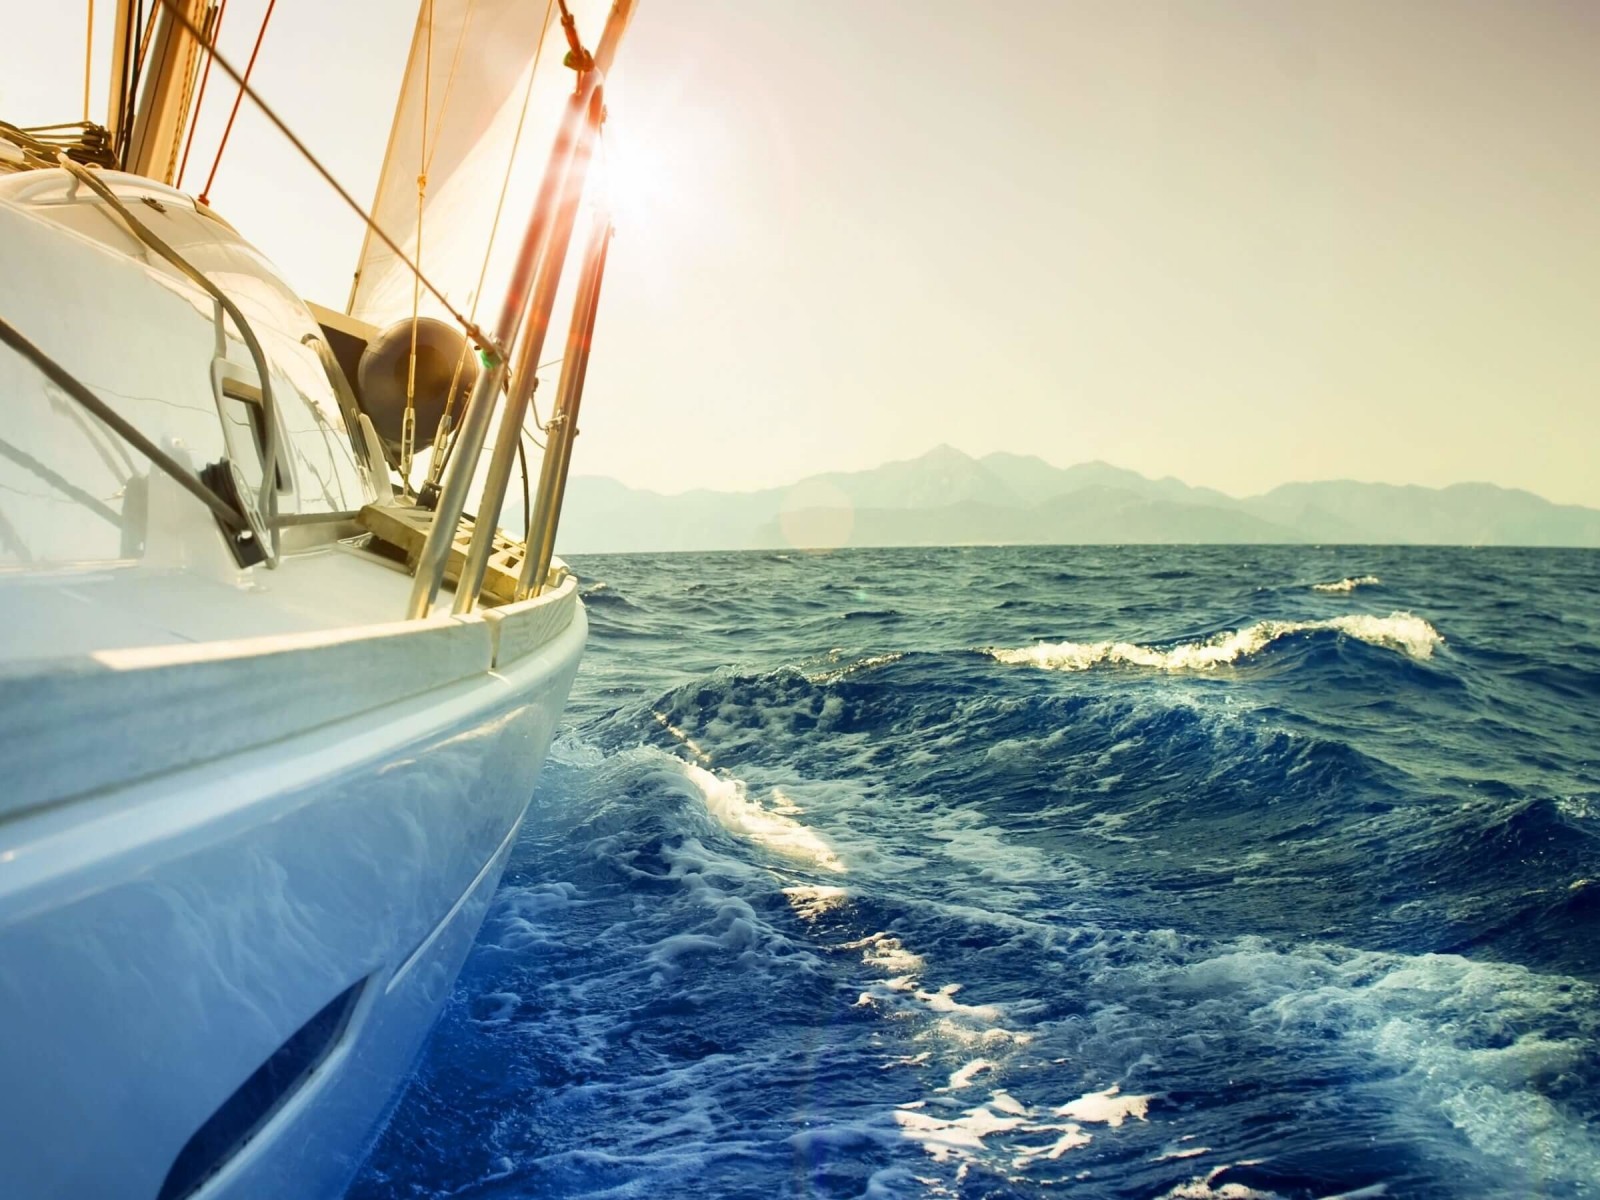 Yacht Sailing Downwind at Sunset Wallpaper for Desktop 1600x1200